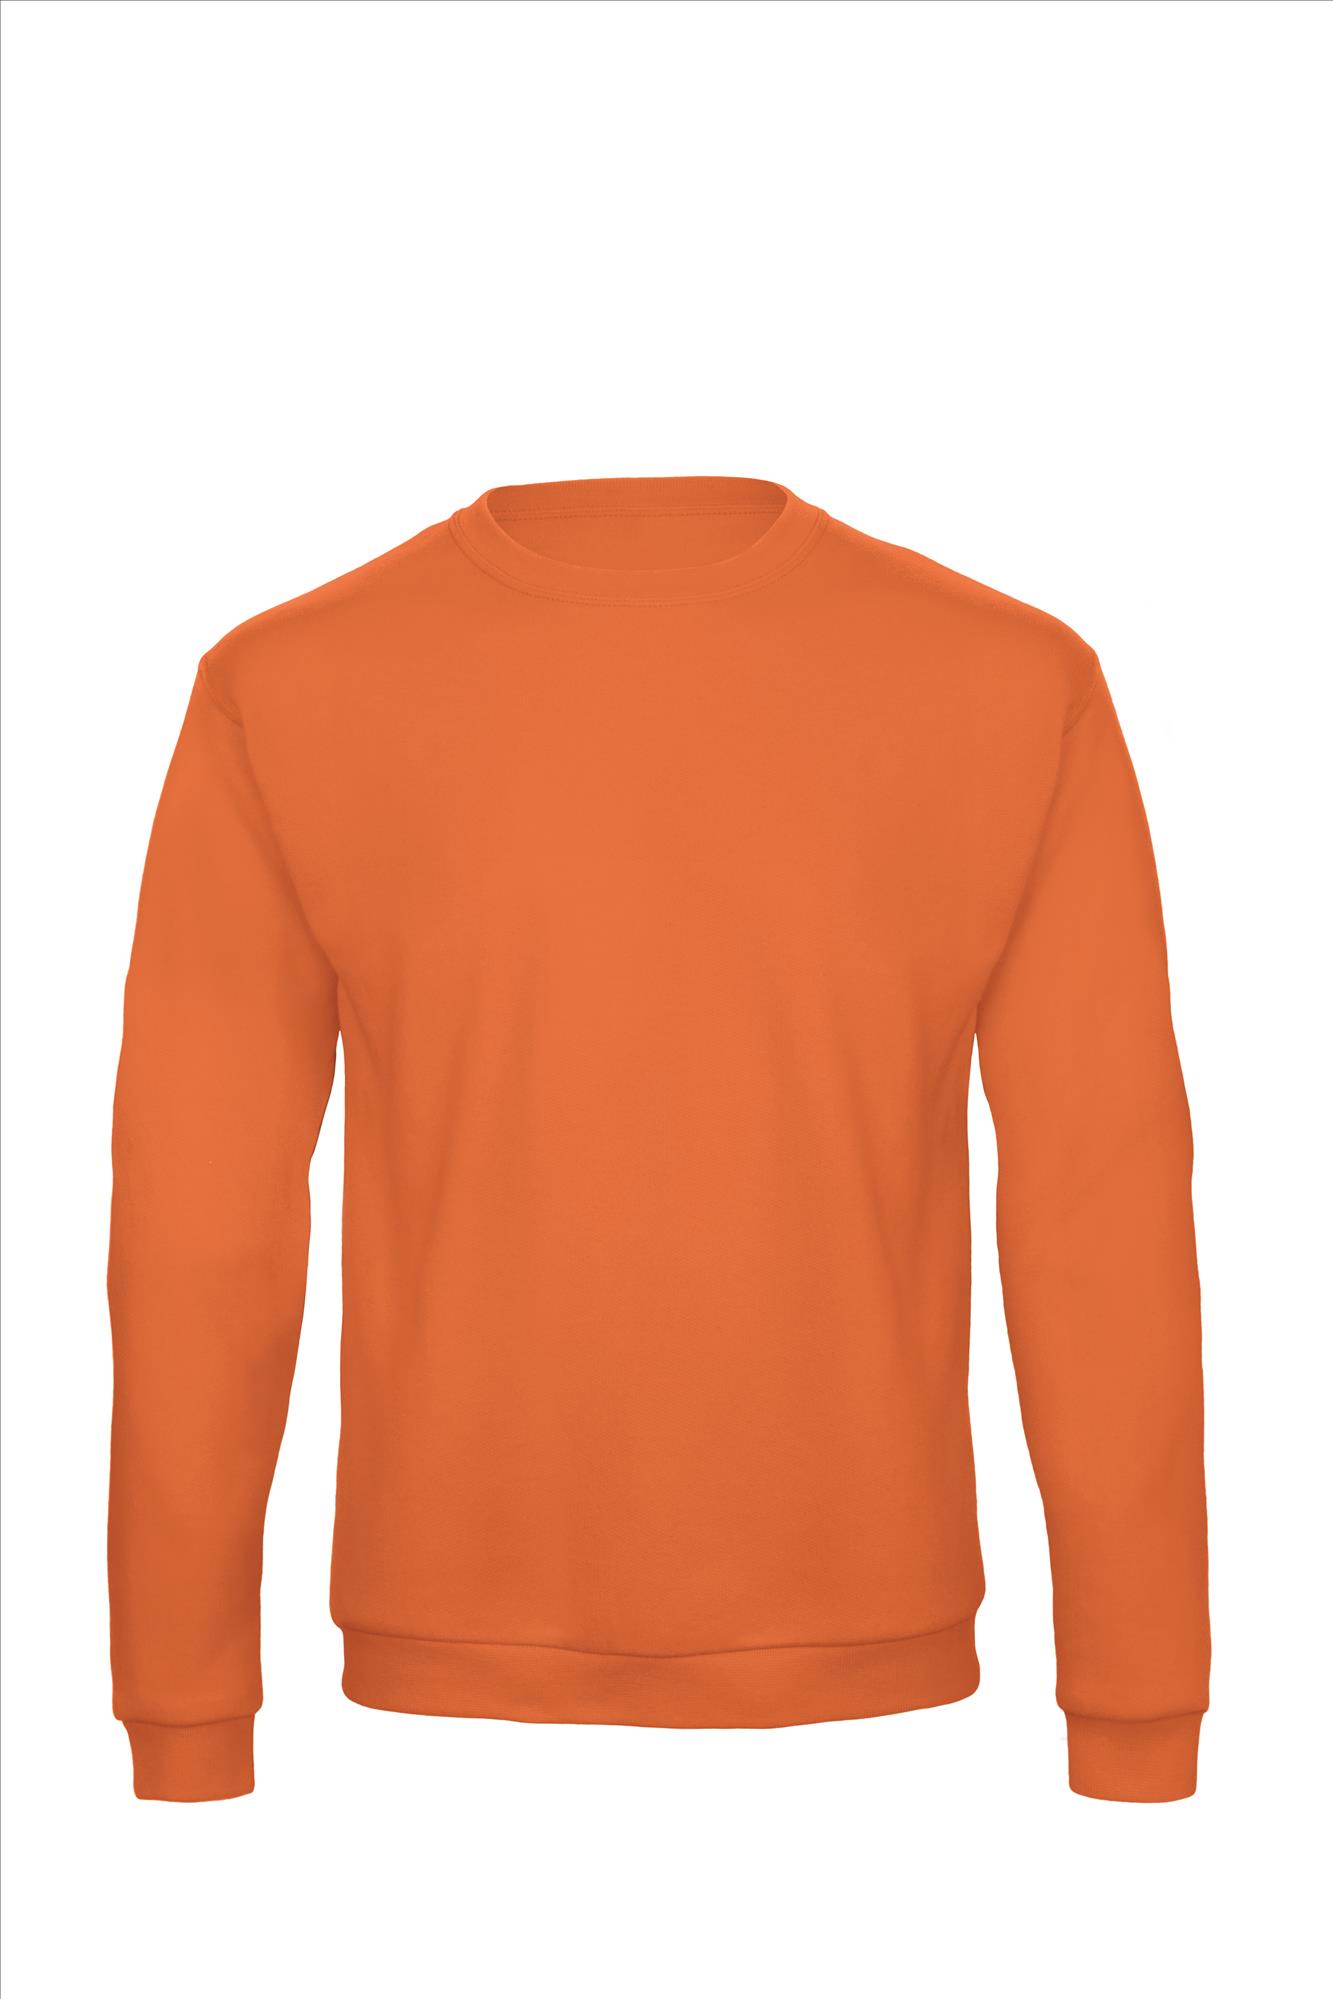 Sweater Uni Oranje Unisex